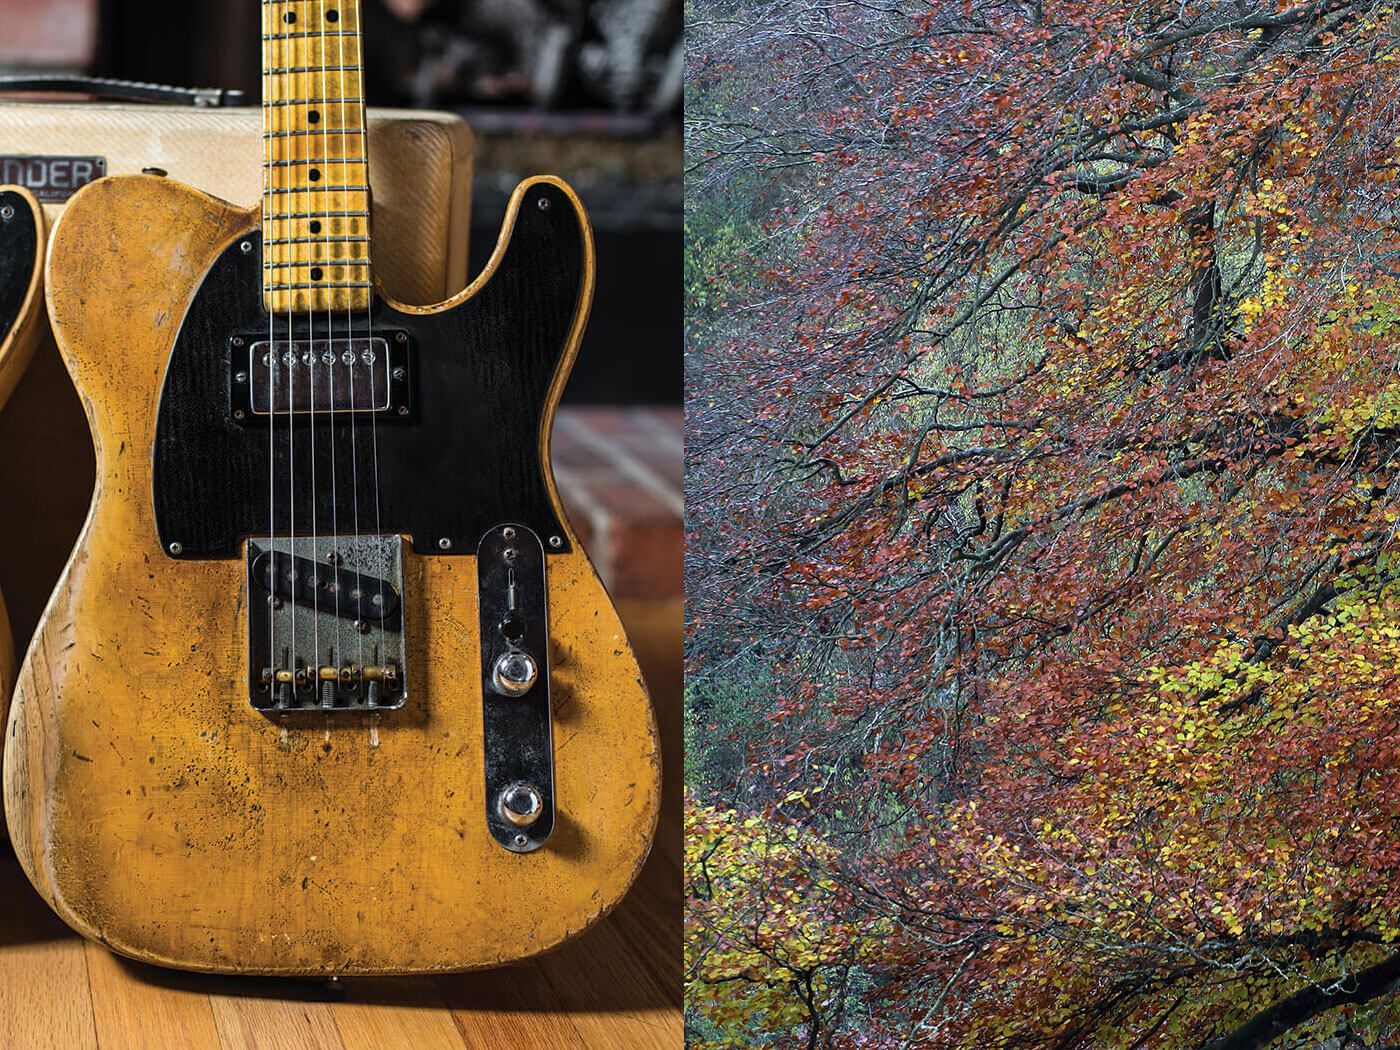 Fender guitar, + an ash tree